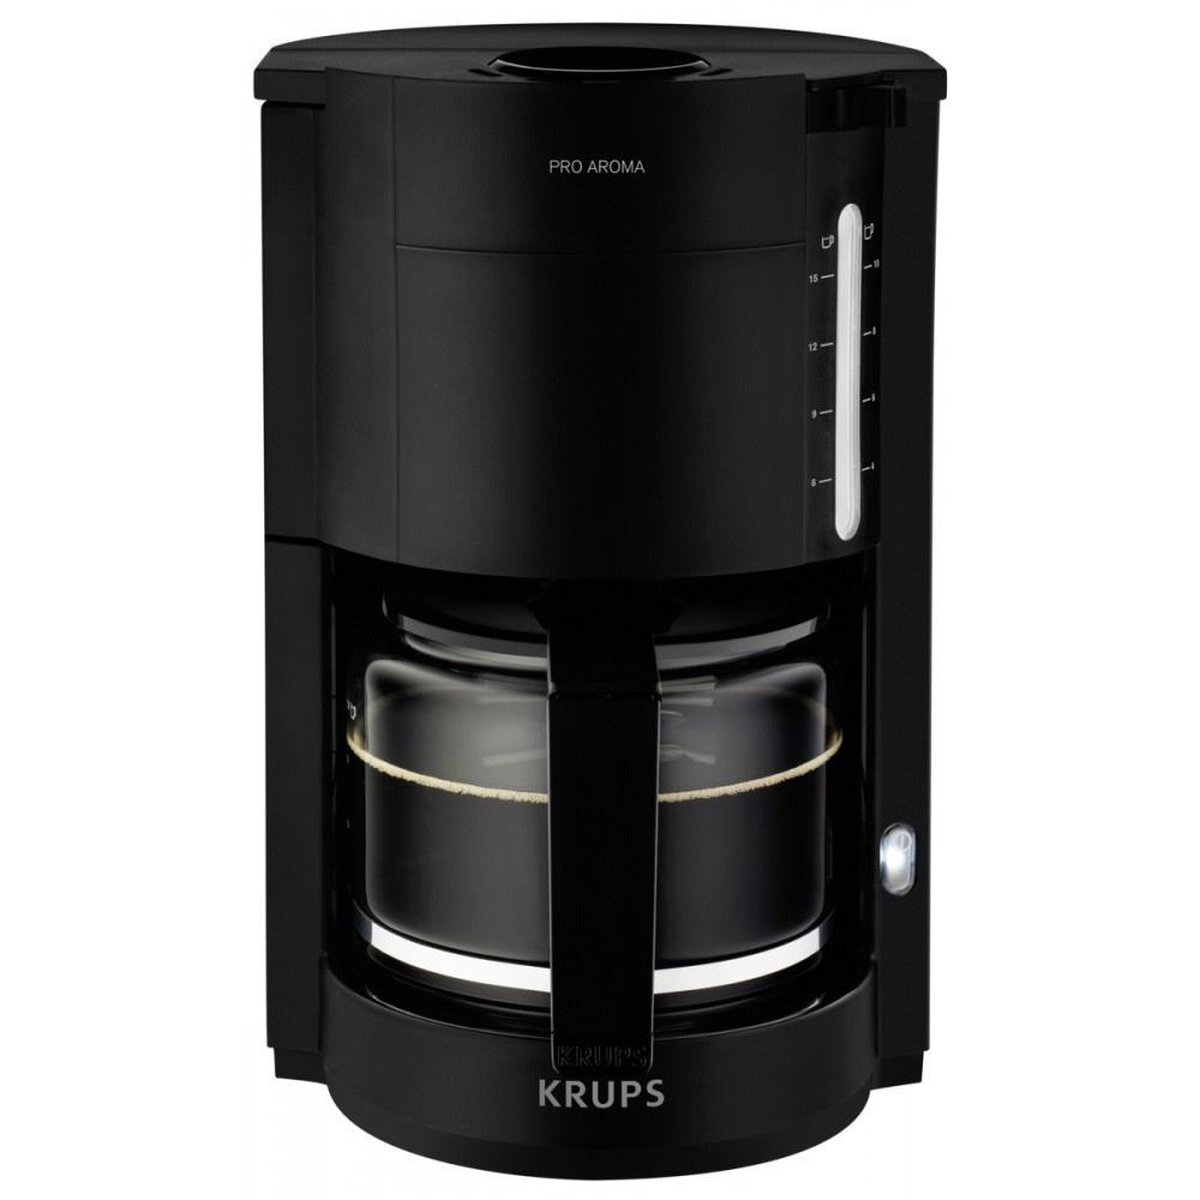 Krups Pro Aroma F30908 – Cafetière